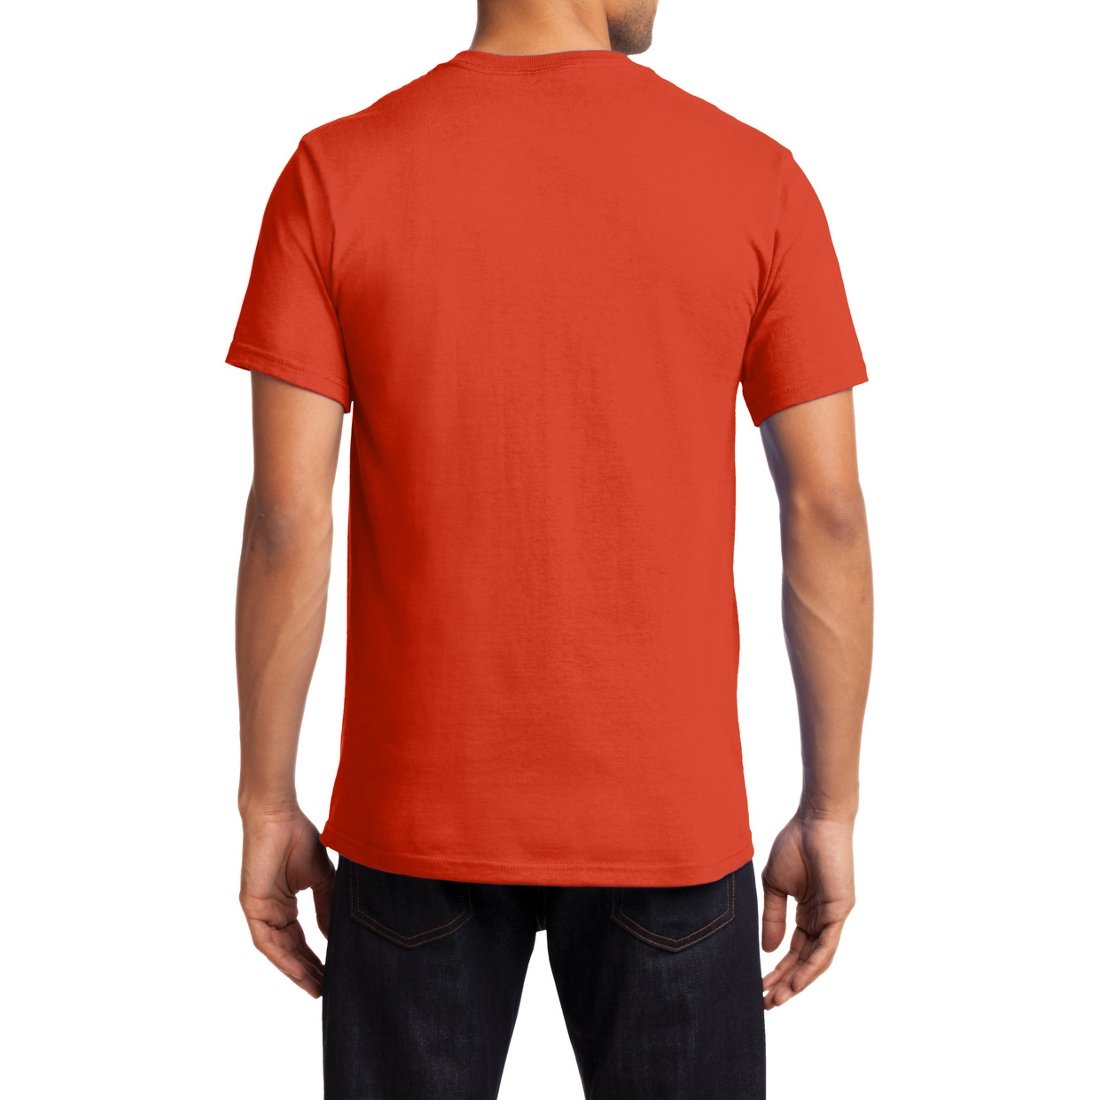 Men's Essential T Shirt with Pocket Orange